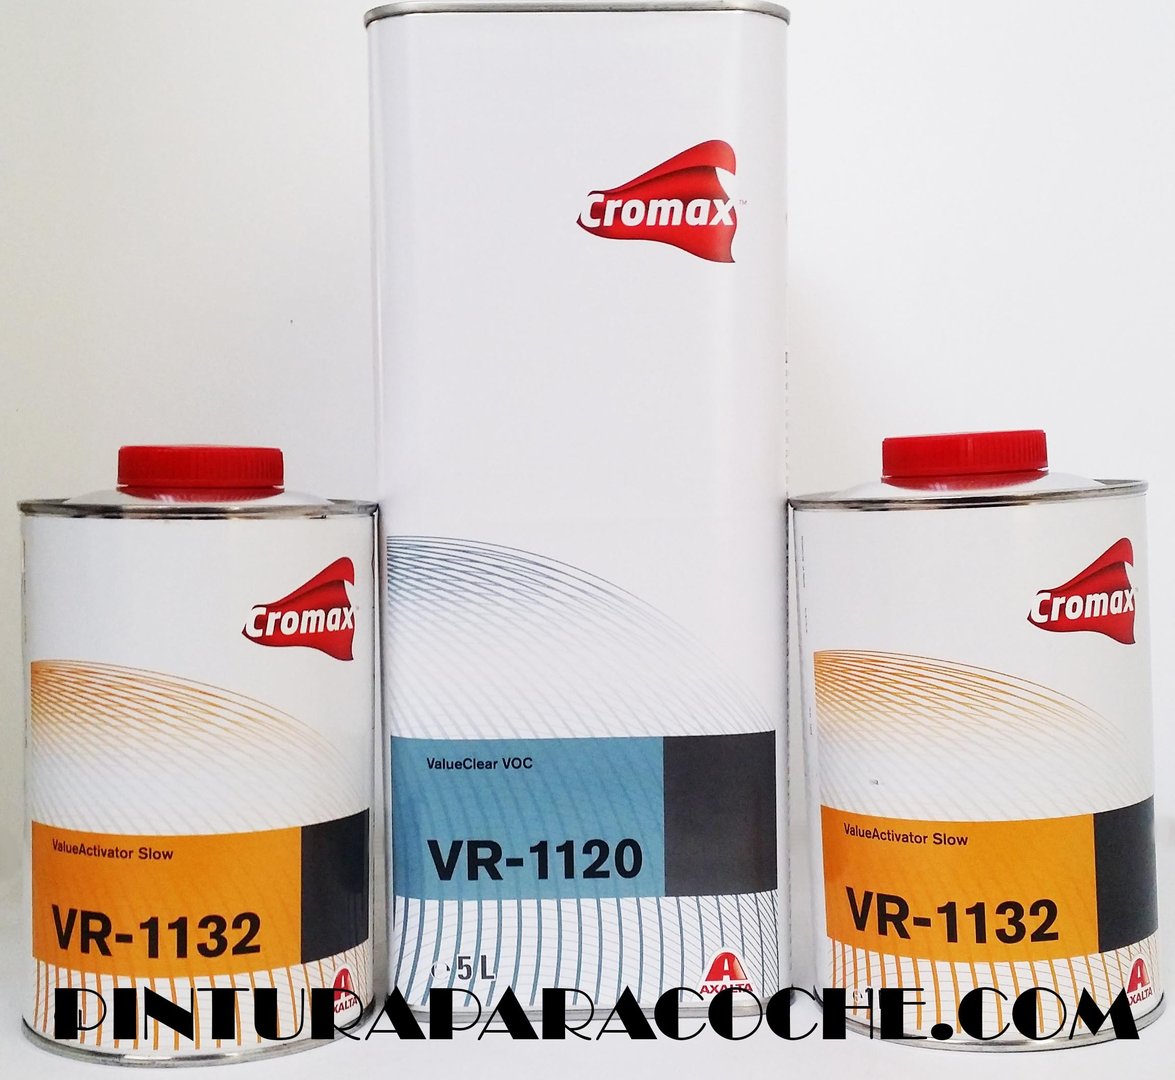 Kit Cromax VR-1120 5lt + 2 Catalizadores VR-1132 1lt